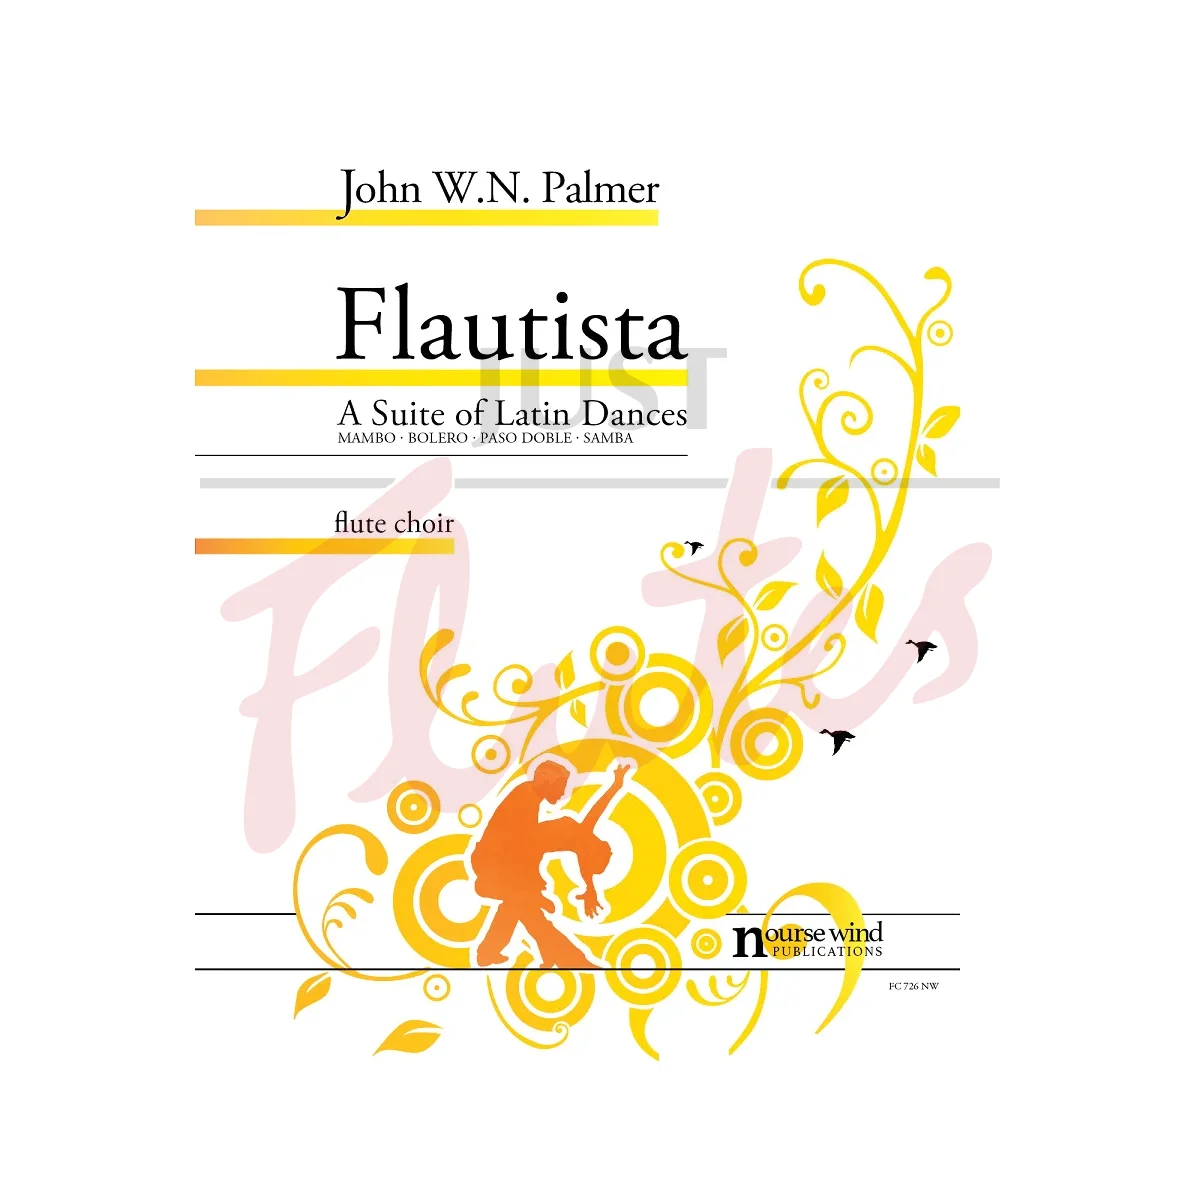 Flautista: A Suite of Latin Dances for Flute Choir